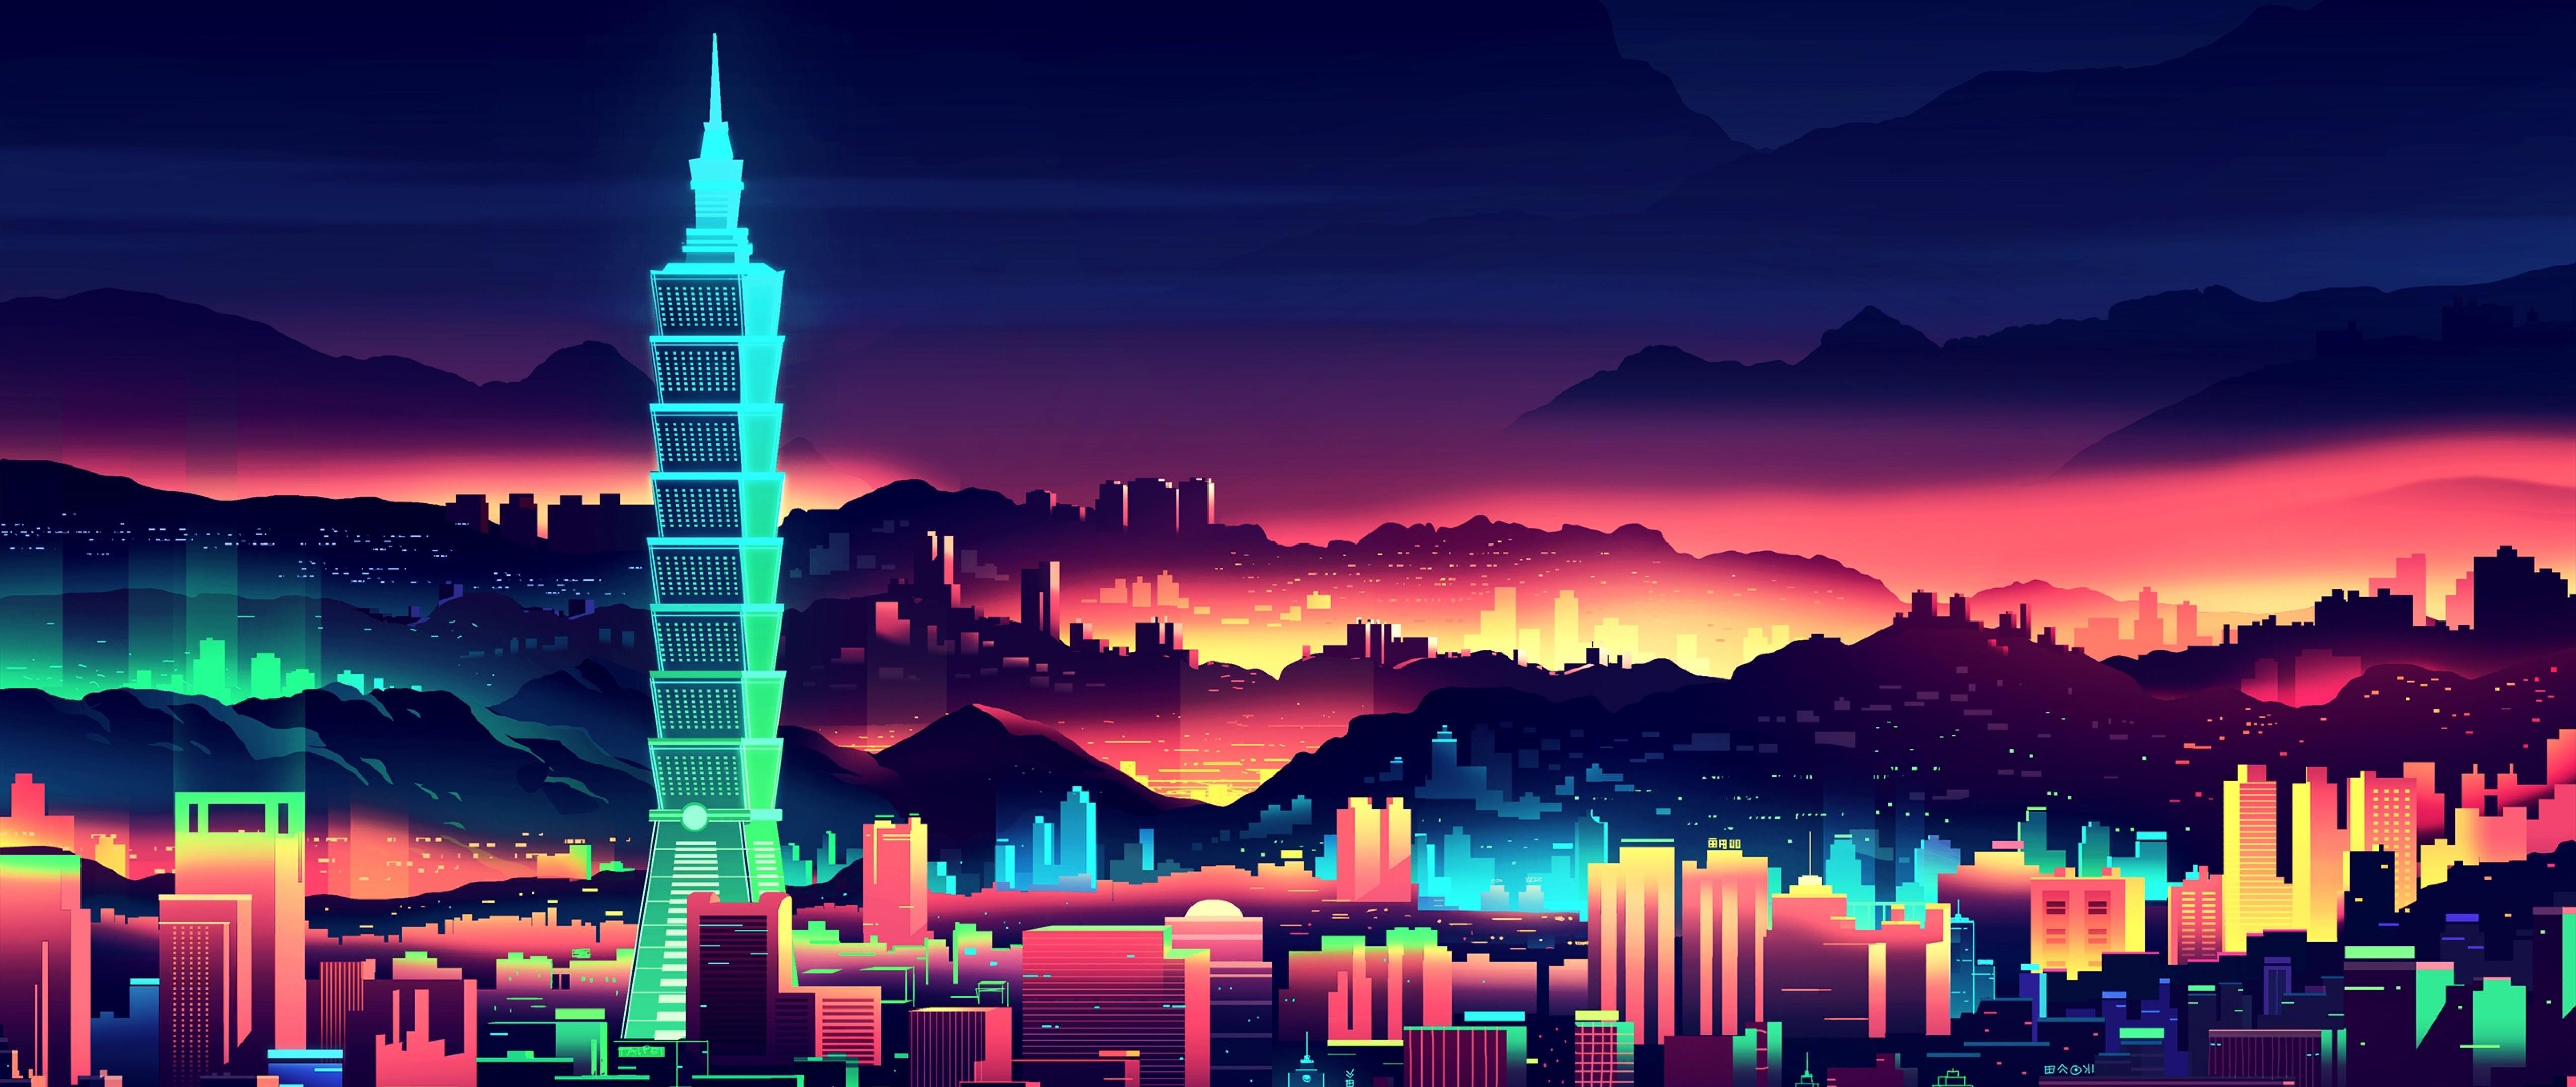 Neon City Wallpaper for Desktop and Mobiles 4K Ultra HD ...